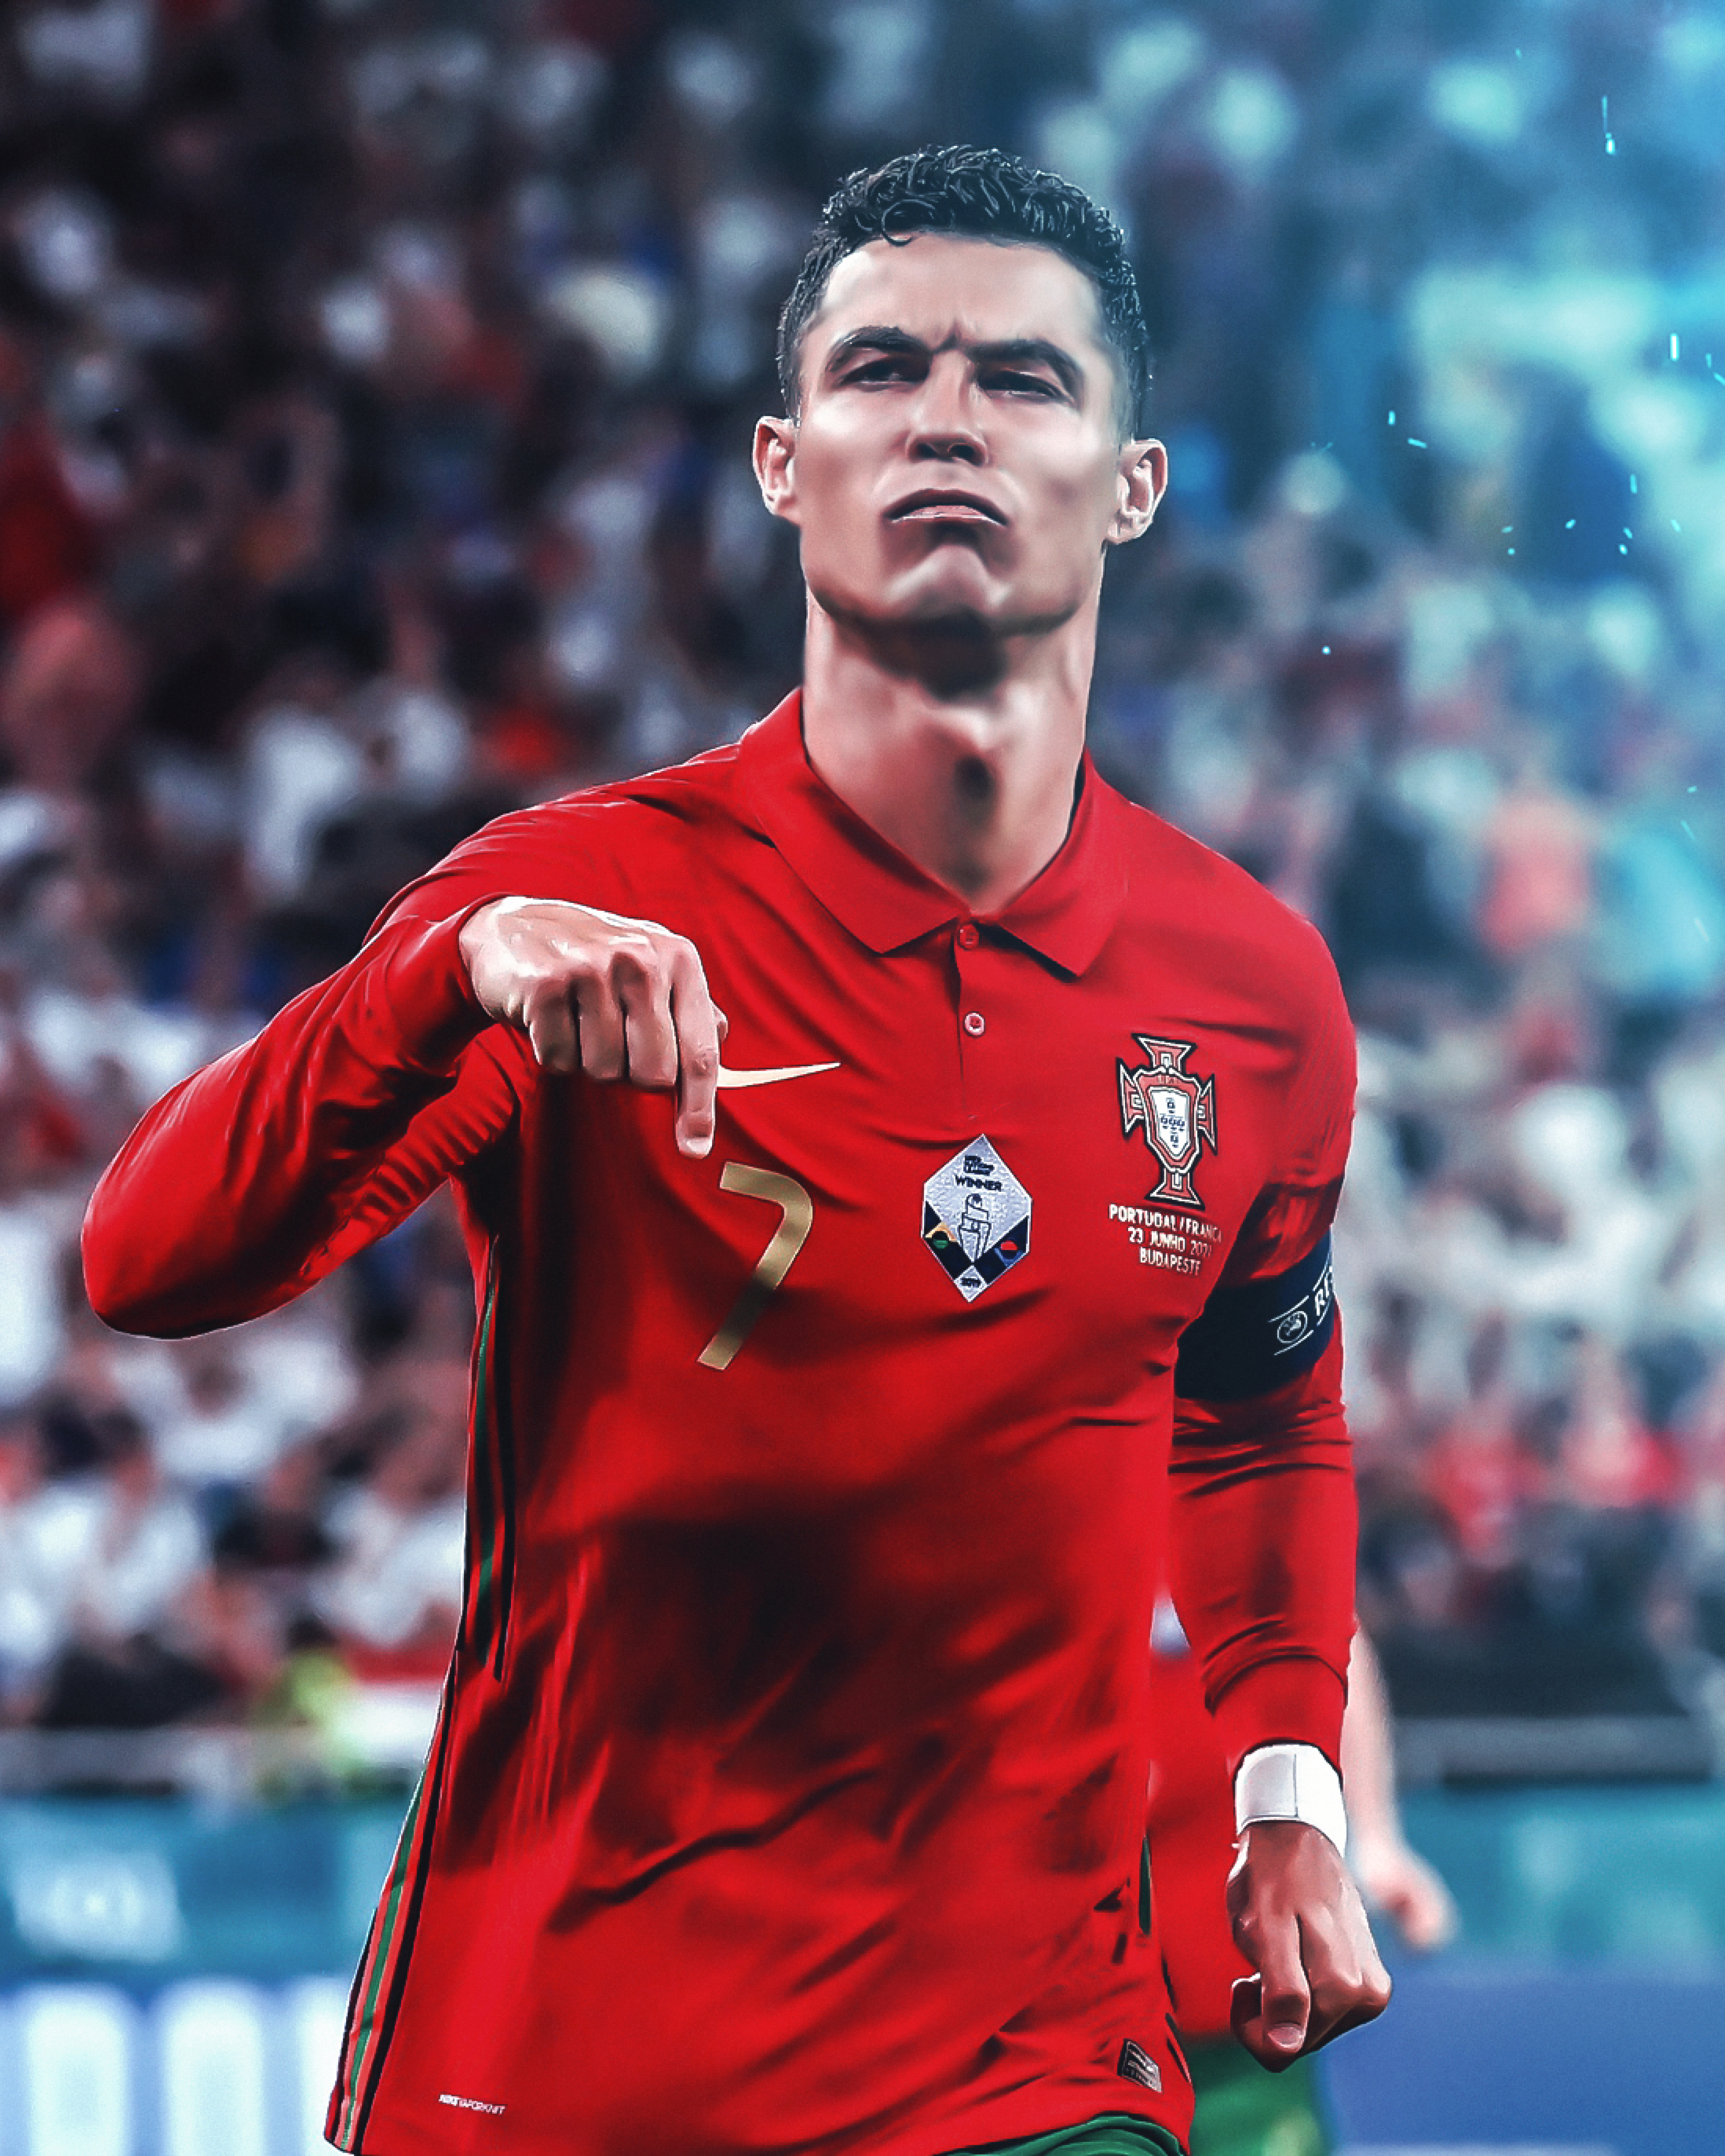 Ronaldo 4K wallpaper by S1Gamer - Download on ZEDGE™